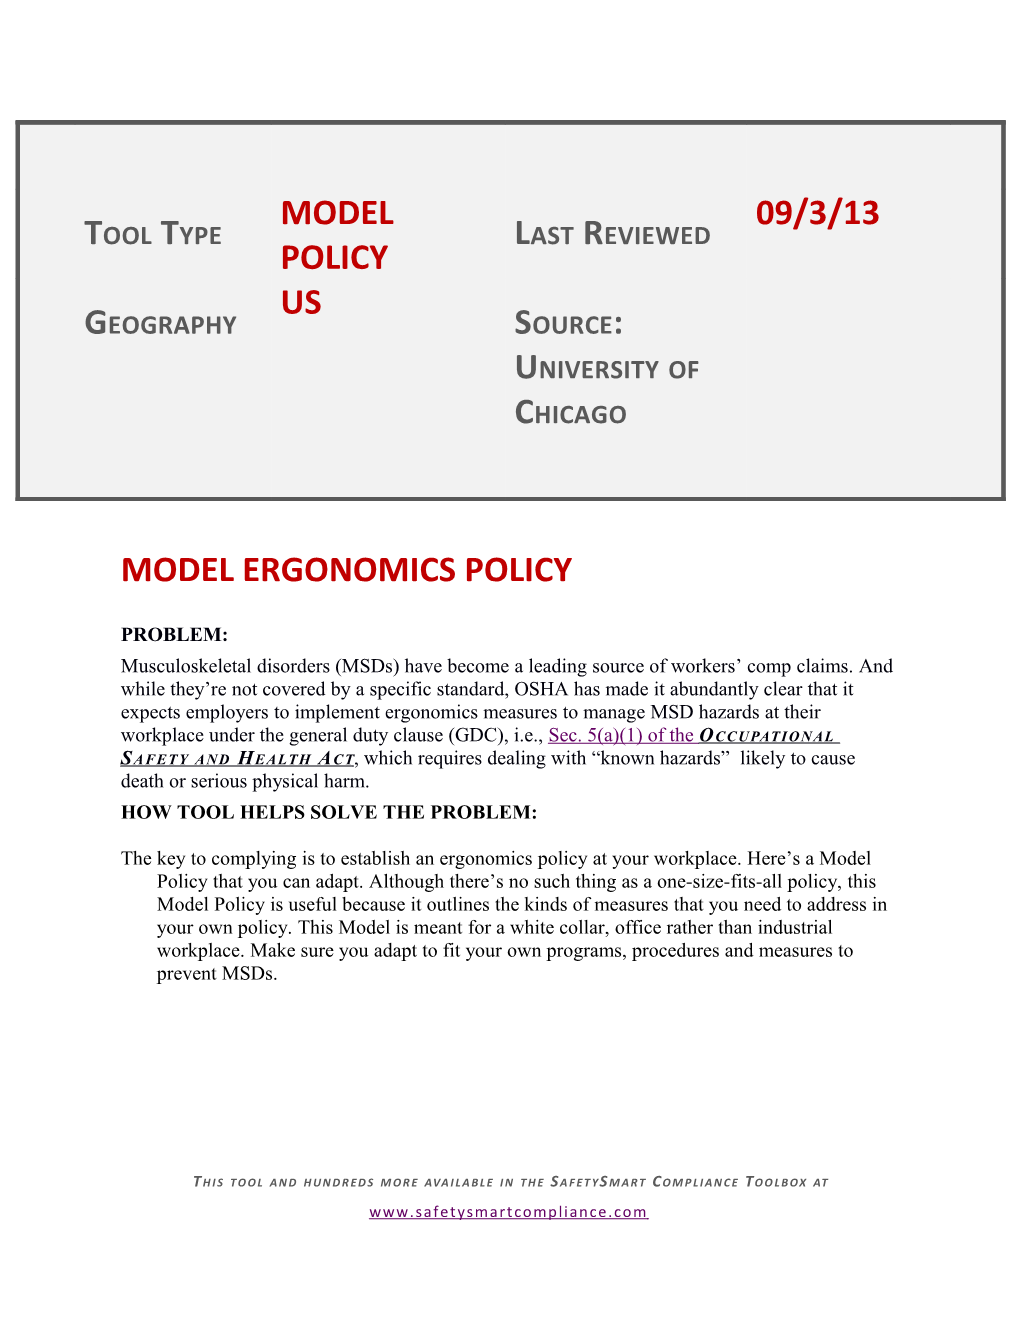 Model Ergonomics Policy